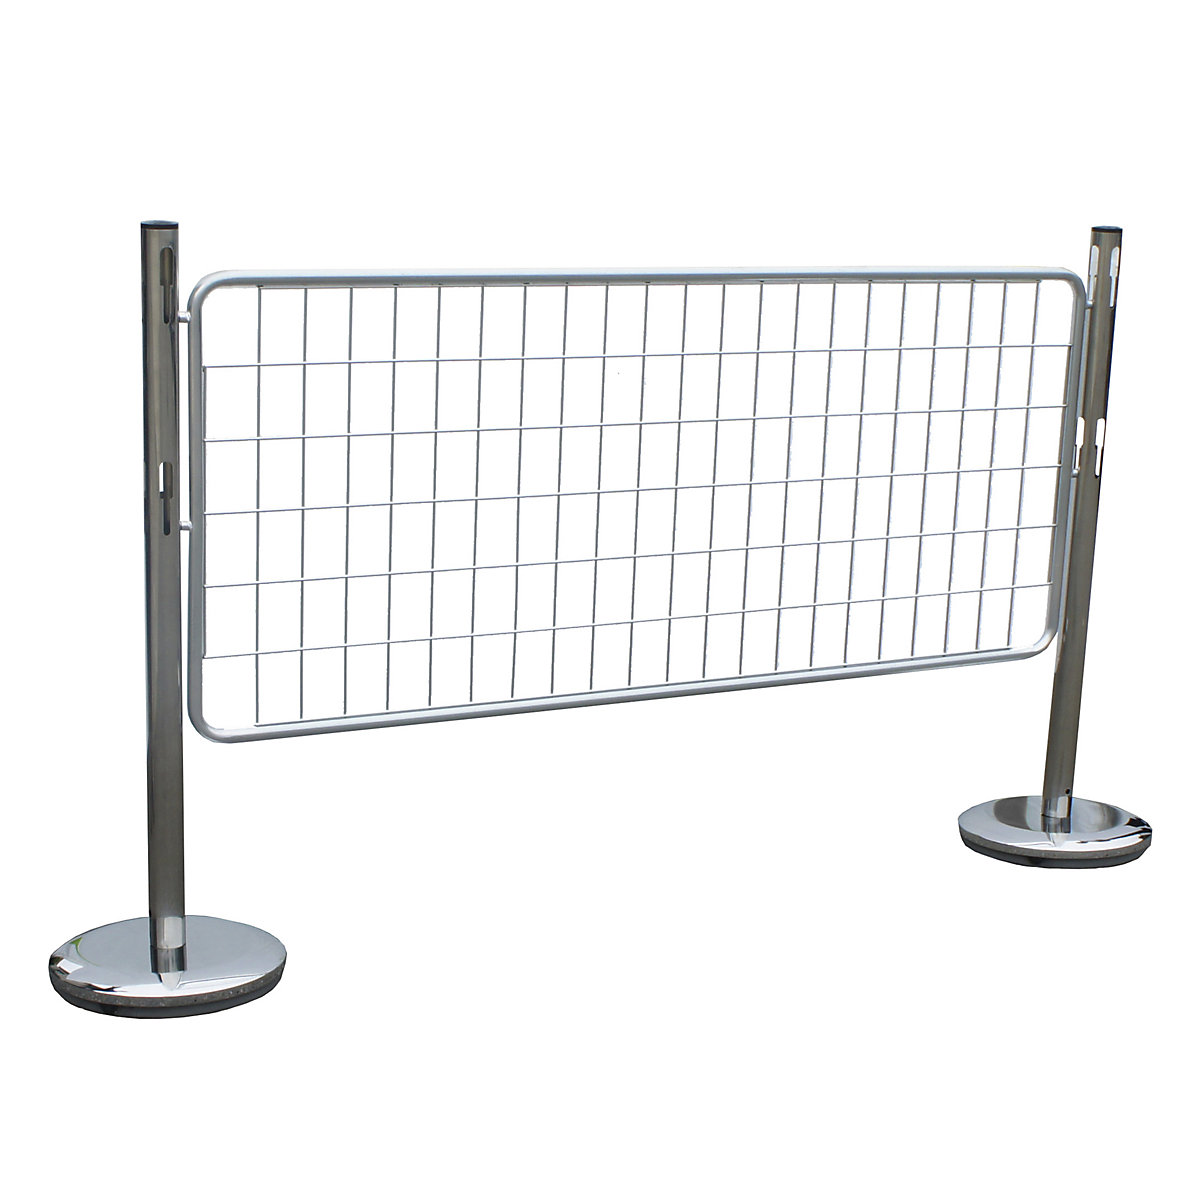 Barrier post set with mesh panel – VISO, 2 posts, 1 mesh panel, zinc plated / chrome plated-3